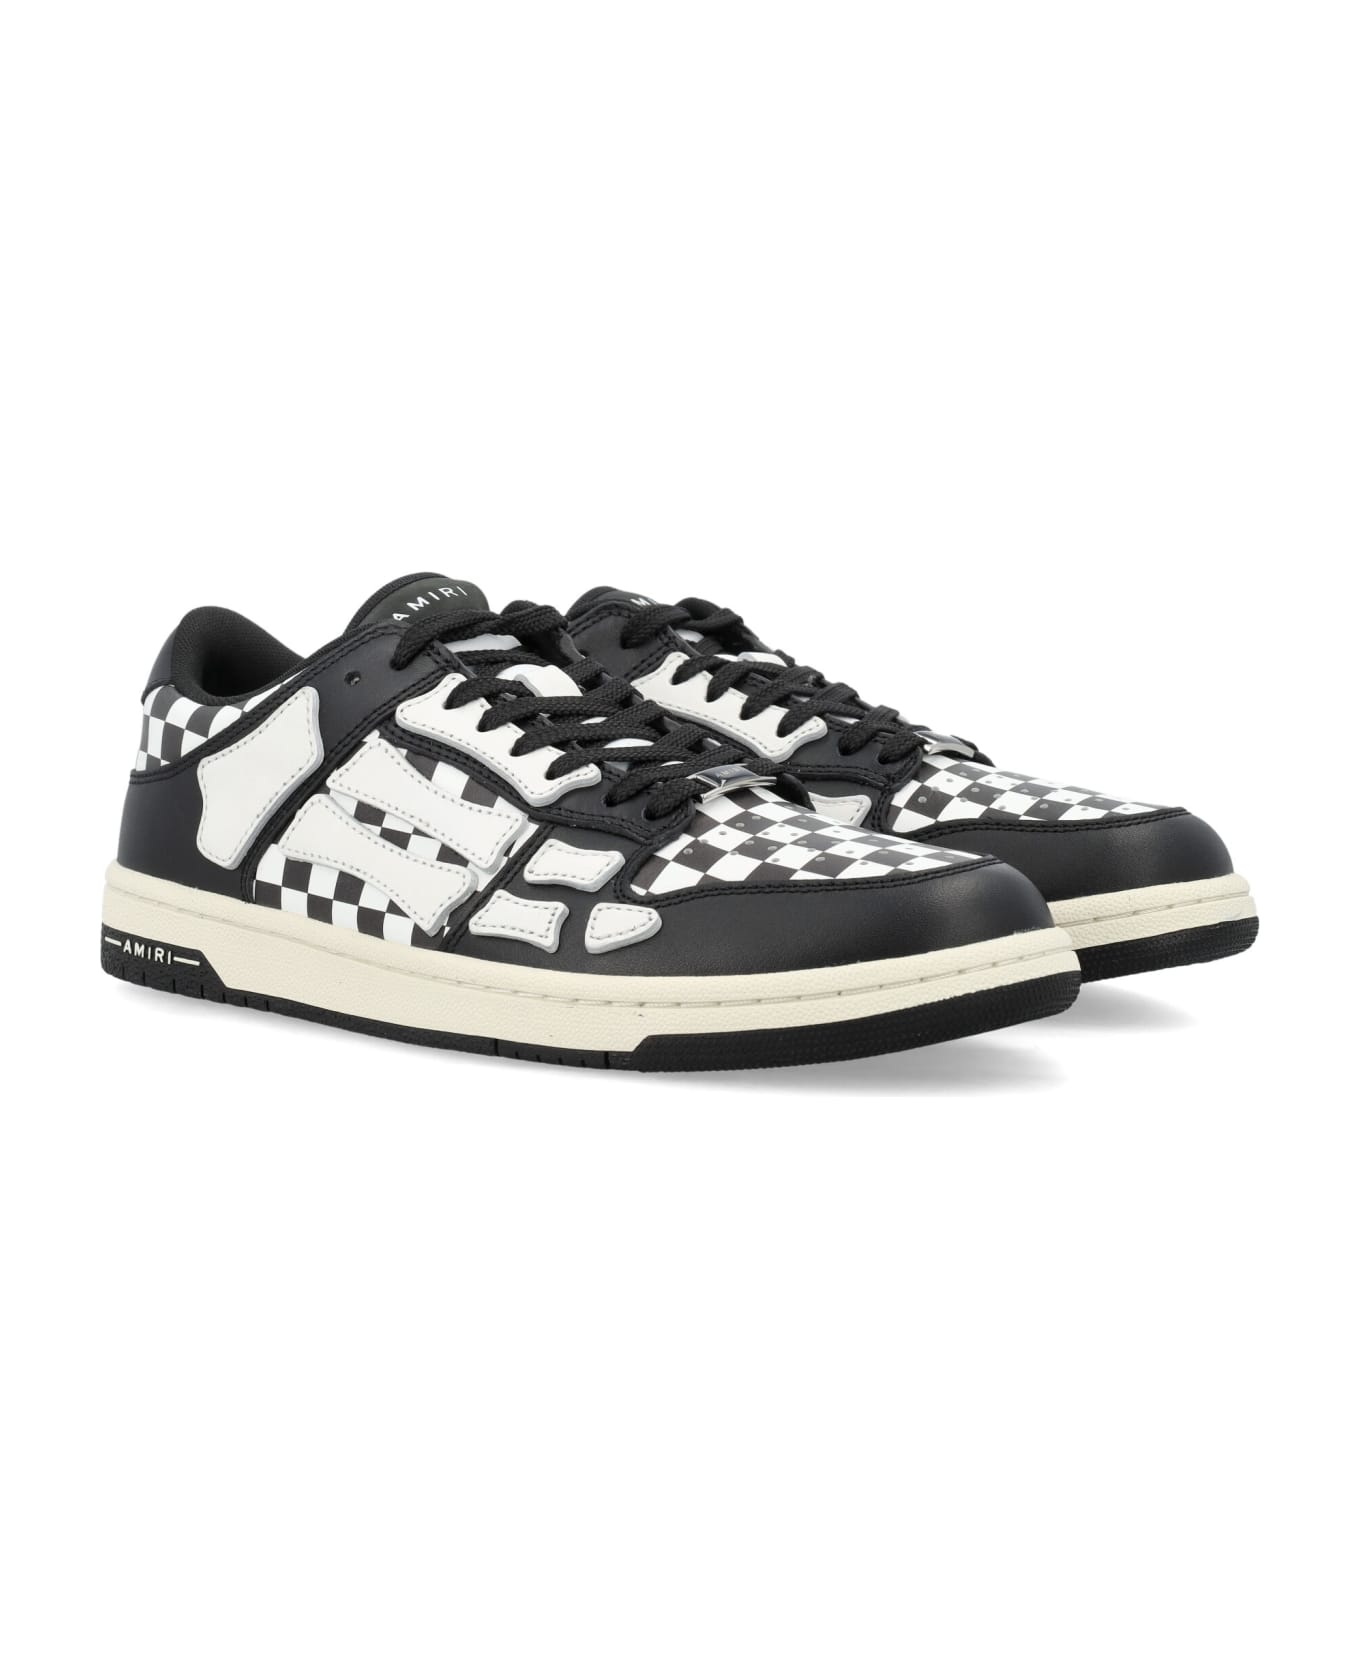 AMIRI Checkered Skel Top Low Sneakers - BLACK WHITE